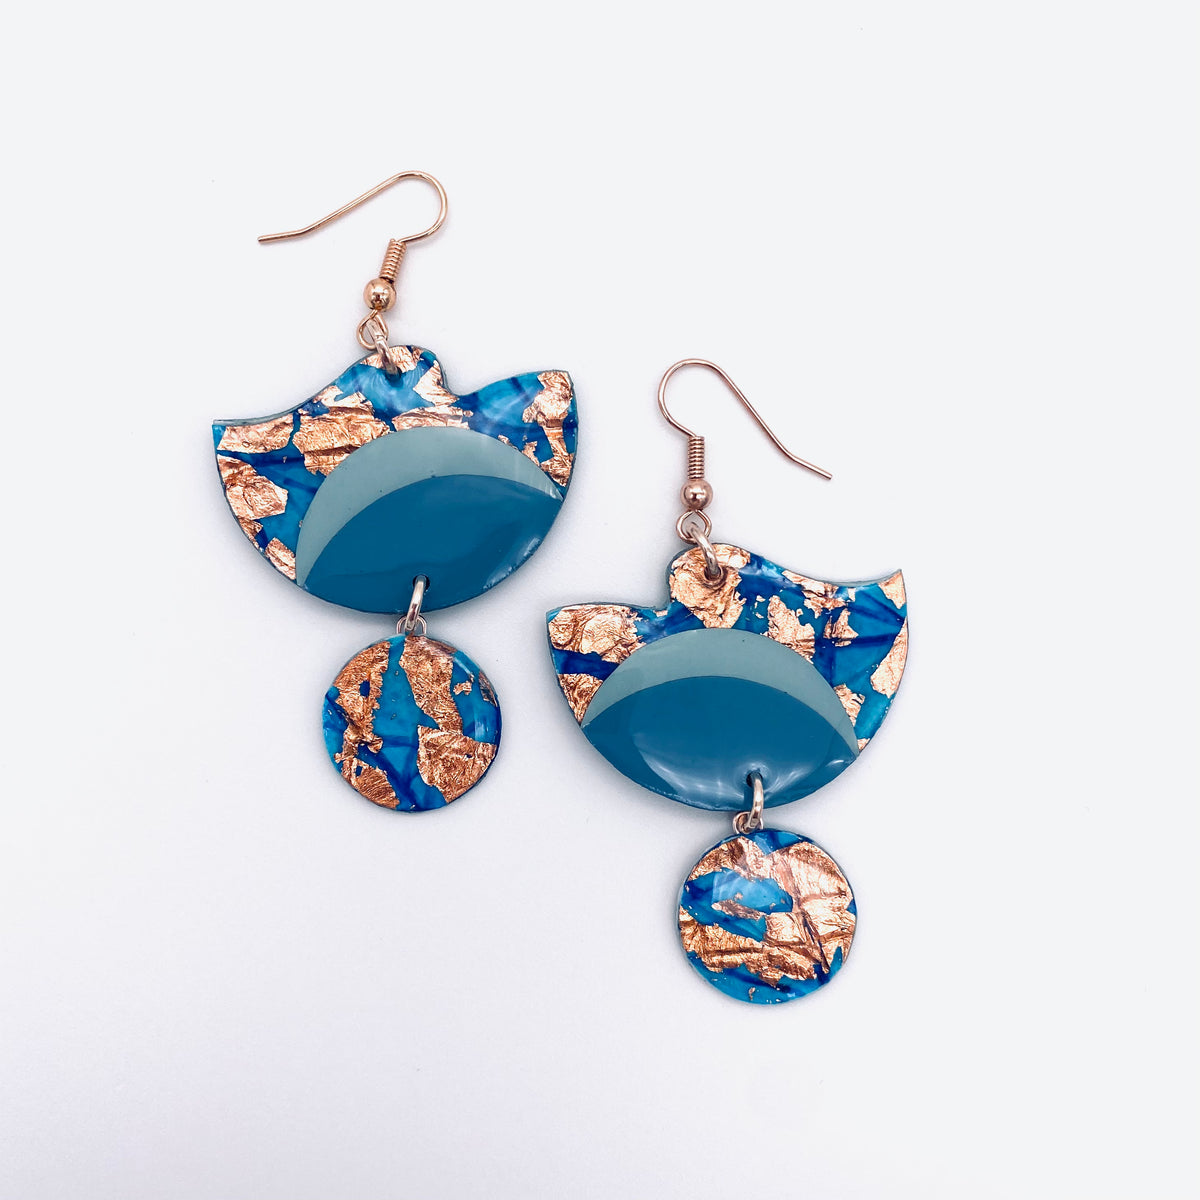 Tonn sgraffito textile earrings in turquiose/blues/rose-gold